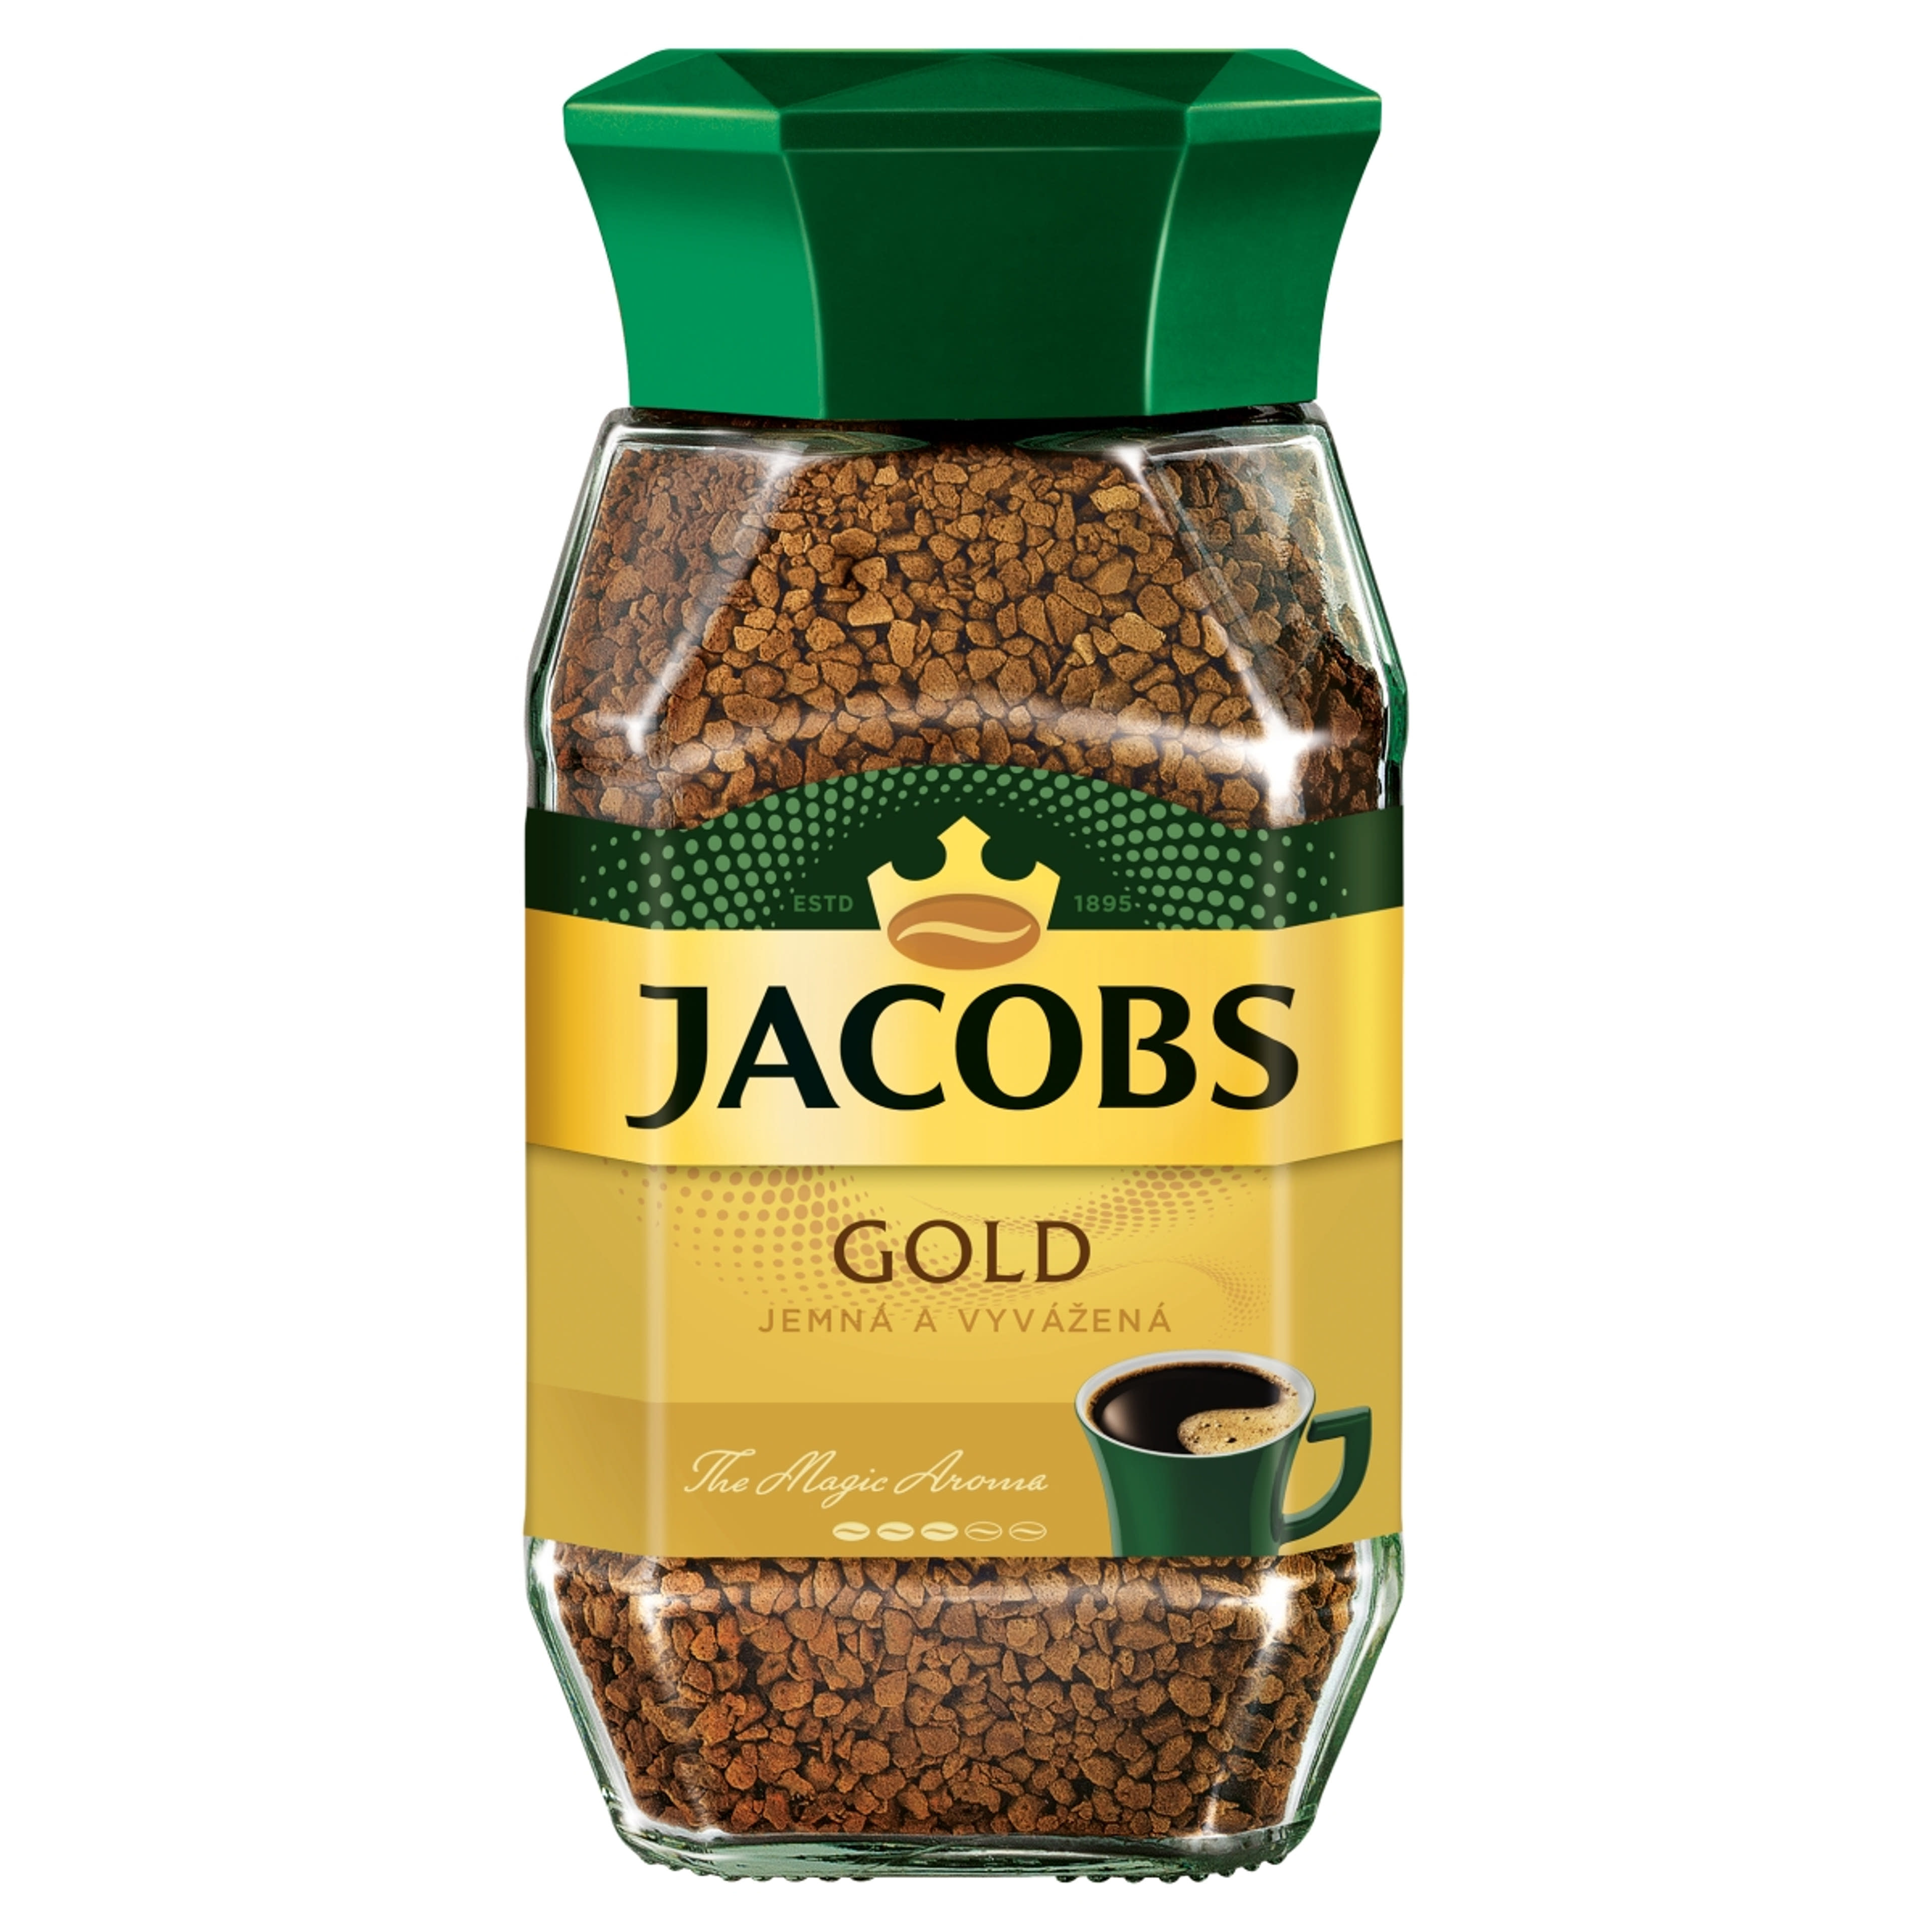 Jacobs Gold üveges instant kávé - 200 g